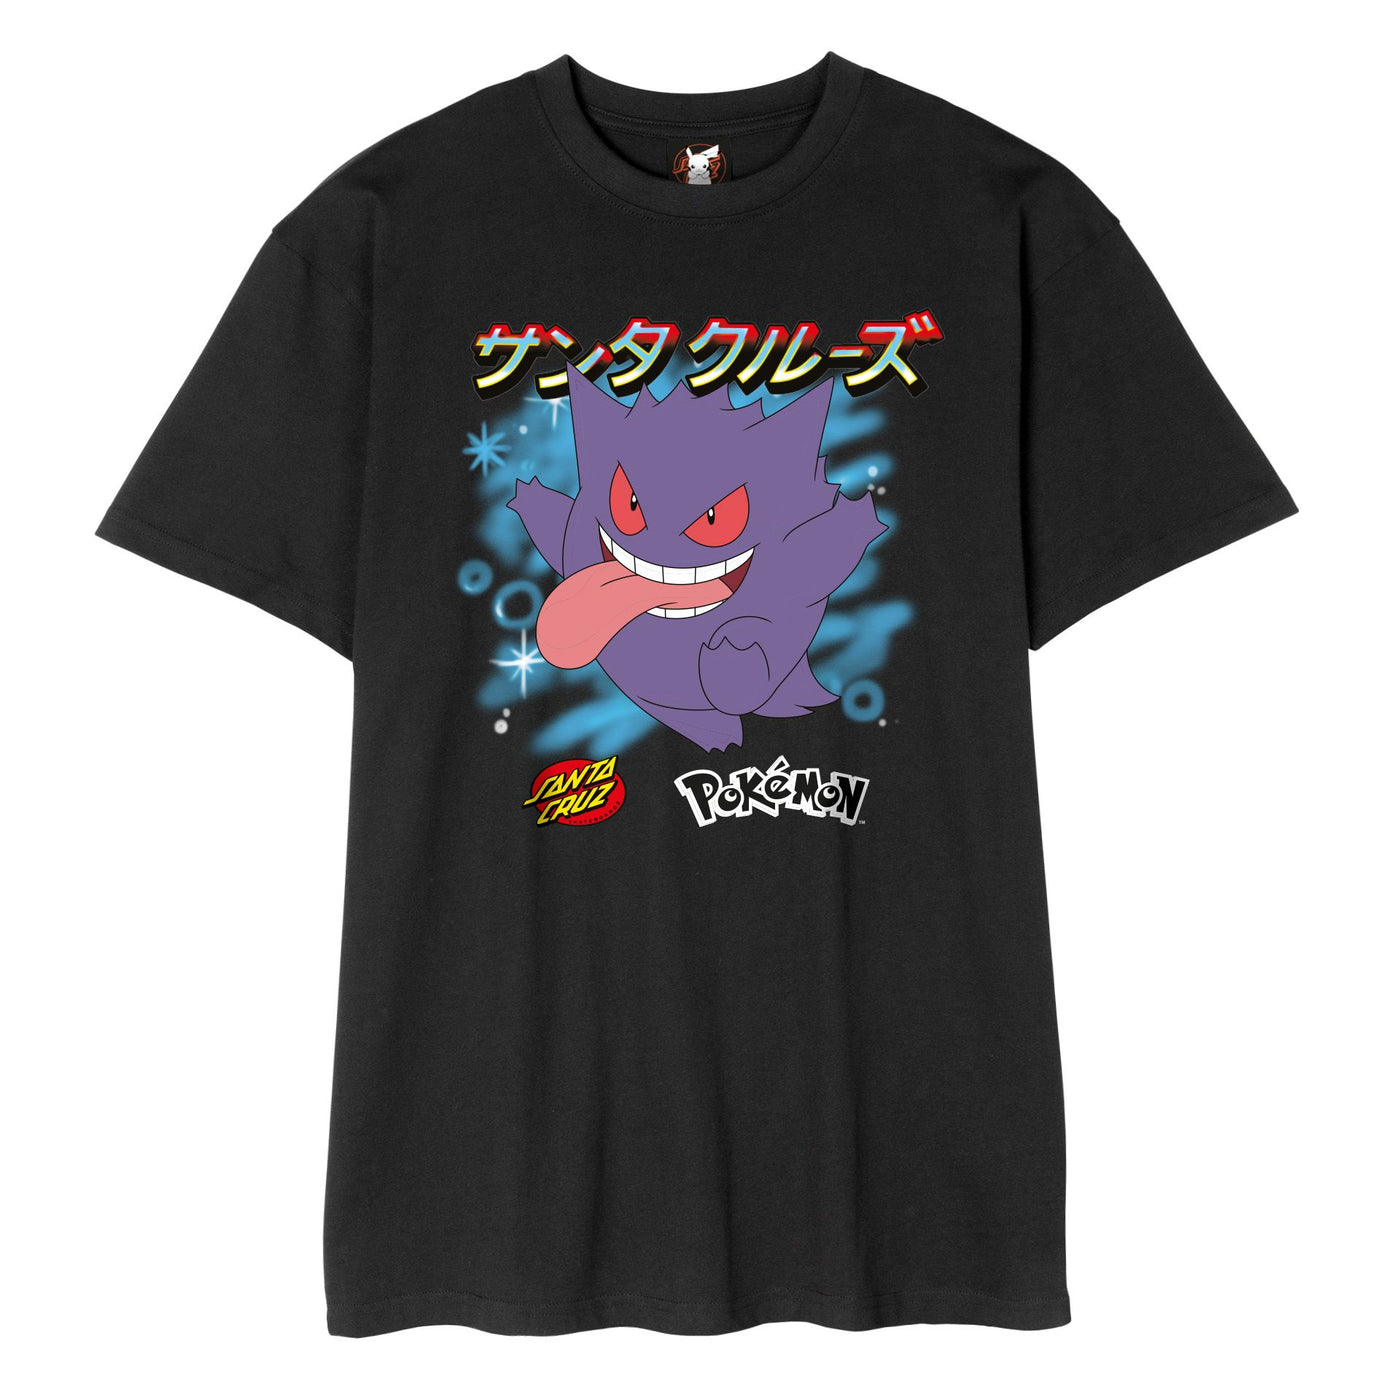 Santa Cruz X Pokémon Ghost Type 3 T-Shirt - Black